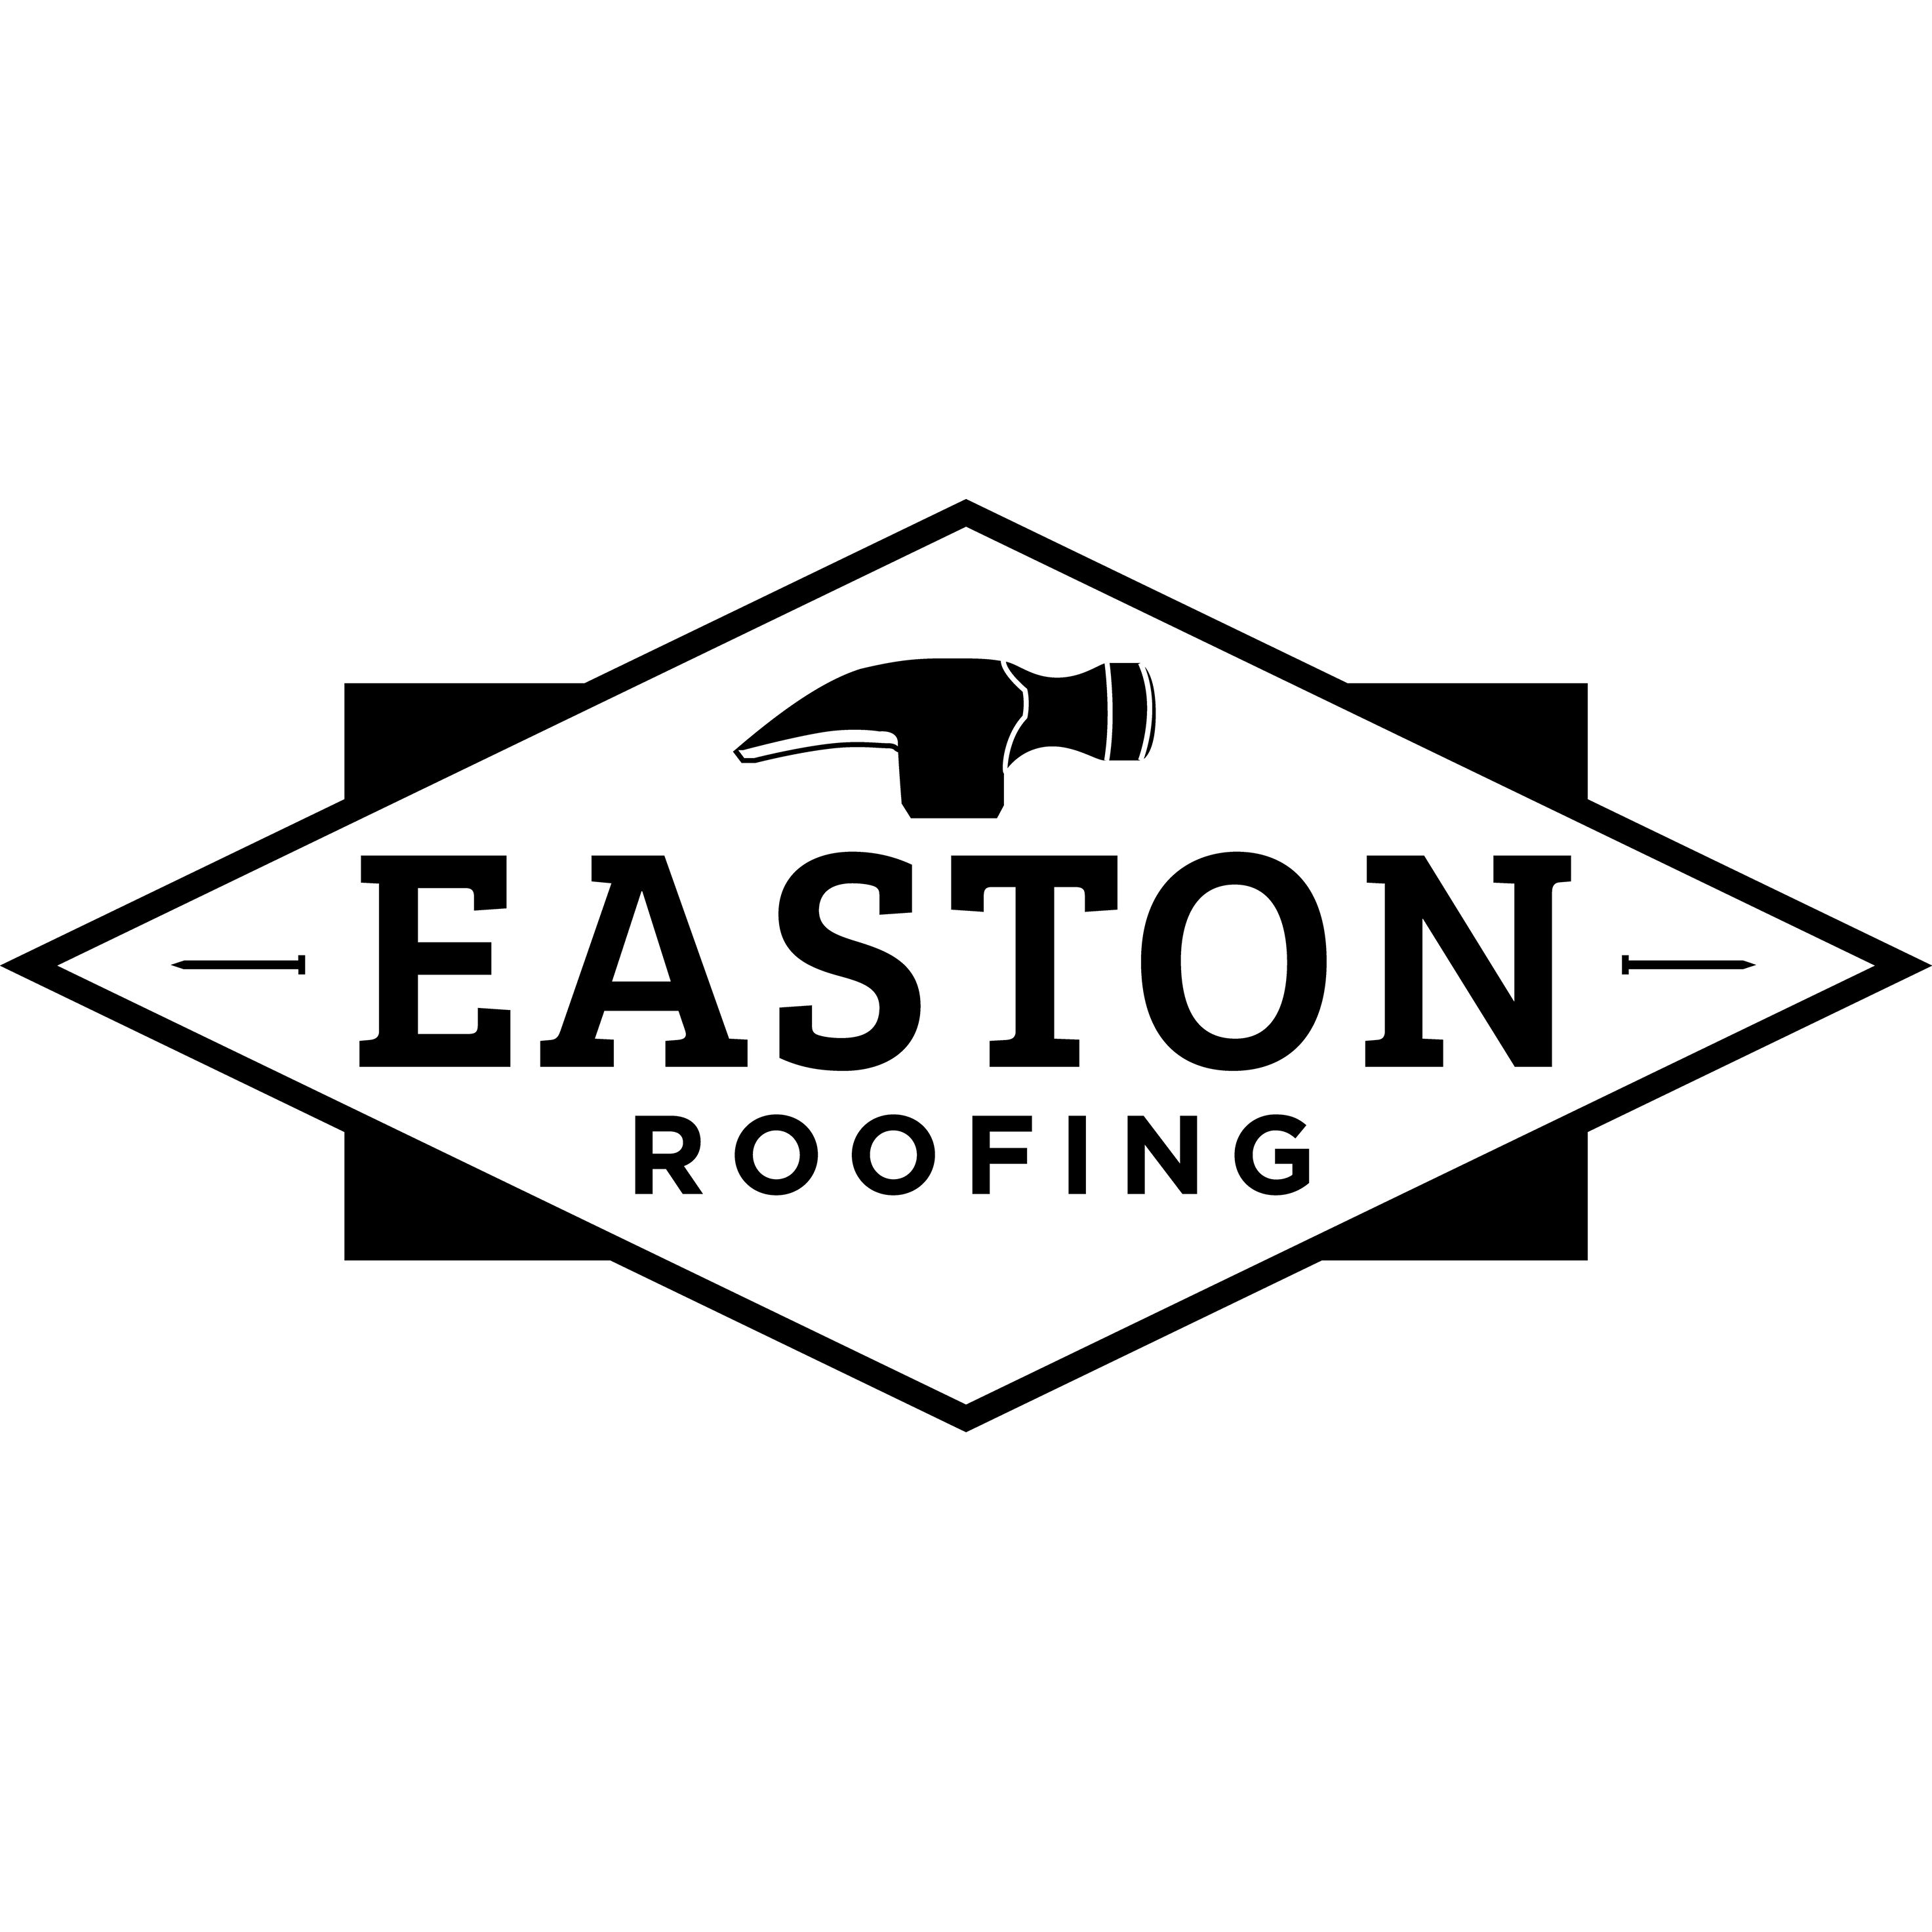 Easton Roofing - Kansas City, KS 66103 - (913)257-5426 | ShowMeLocal.com